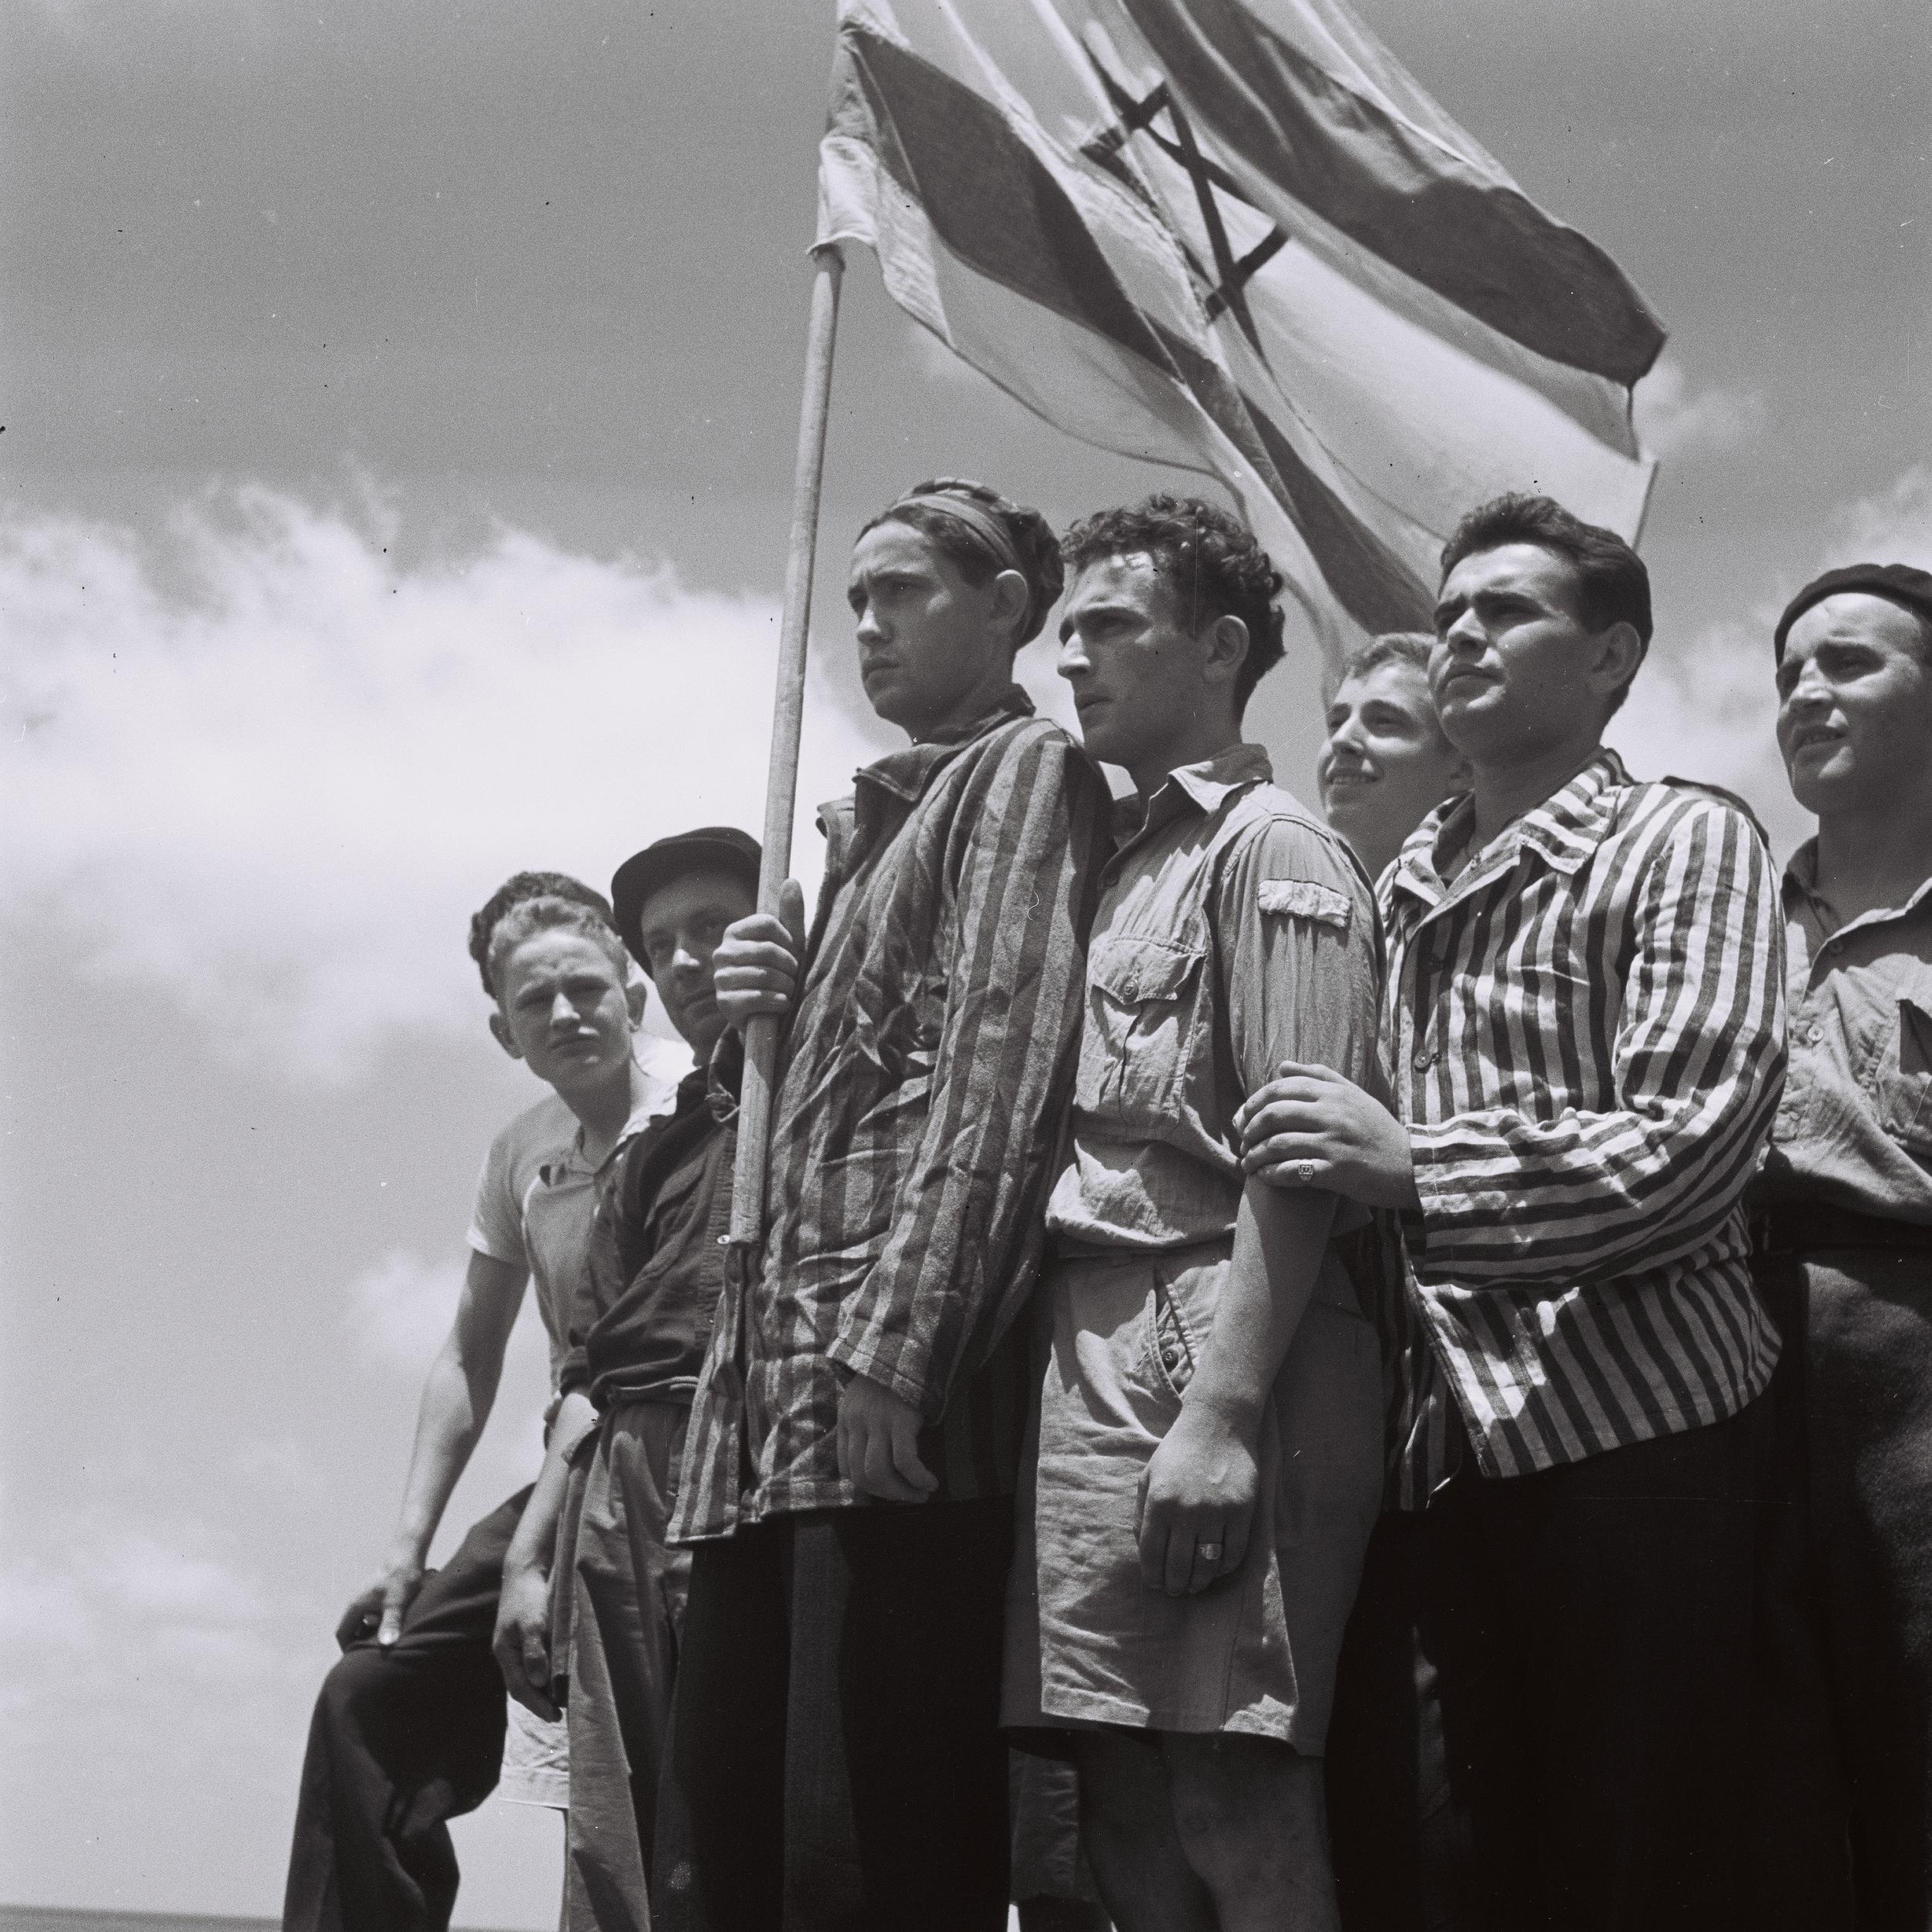 19450715 Buchenwald survivors arrive in Haifa.jpg